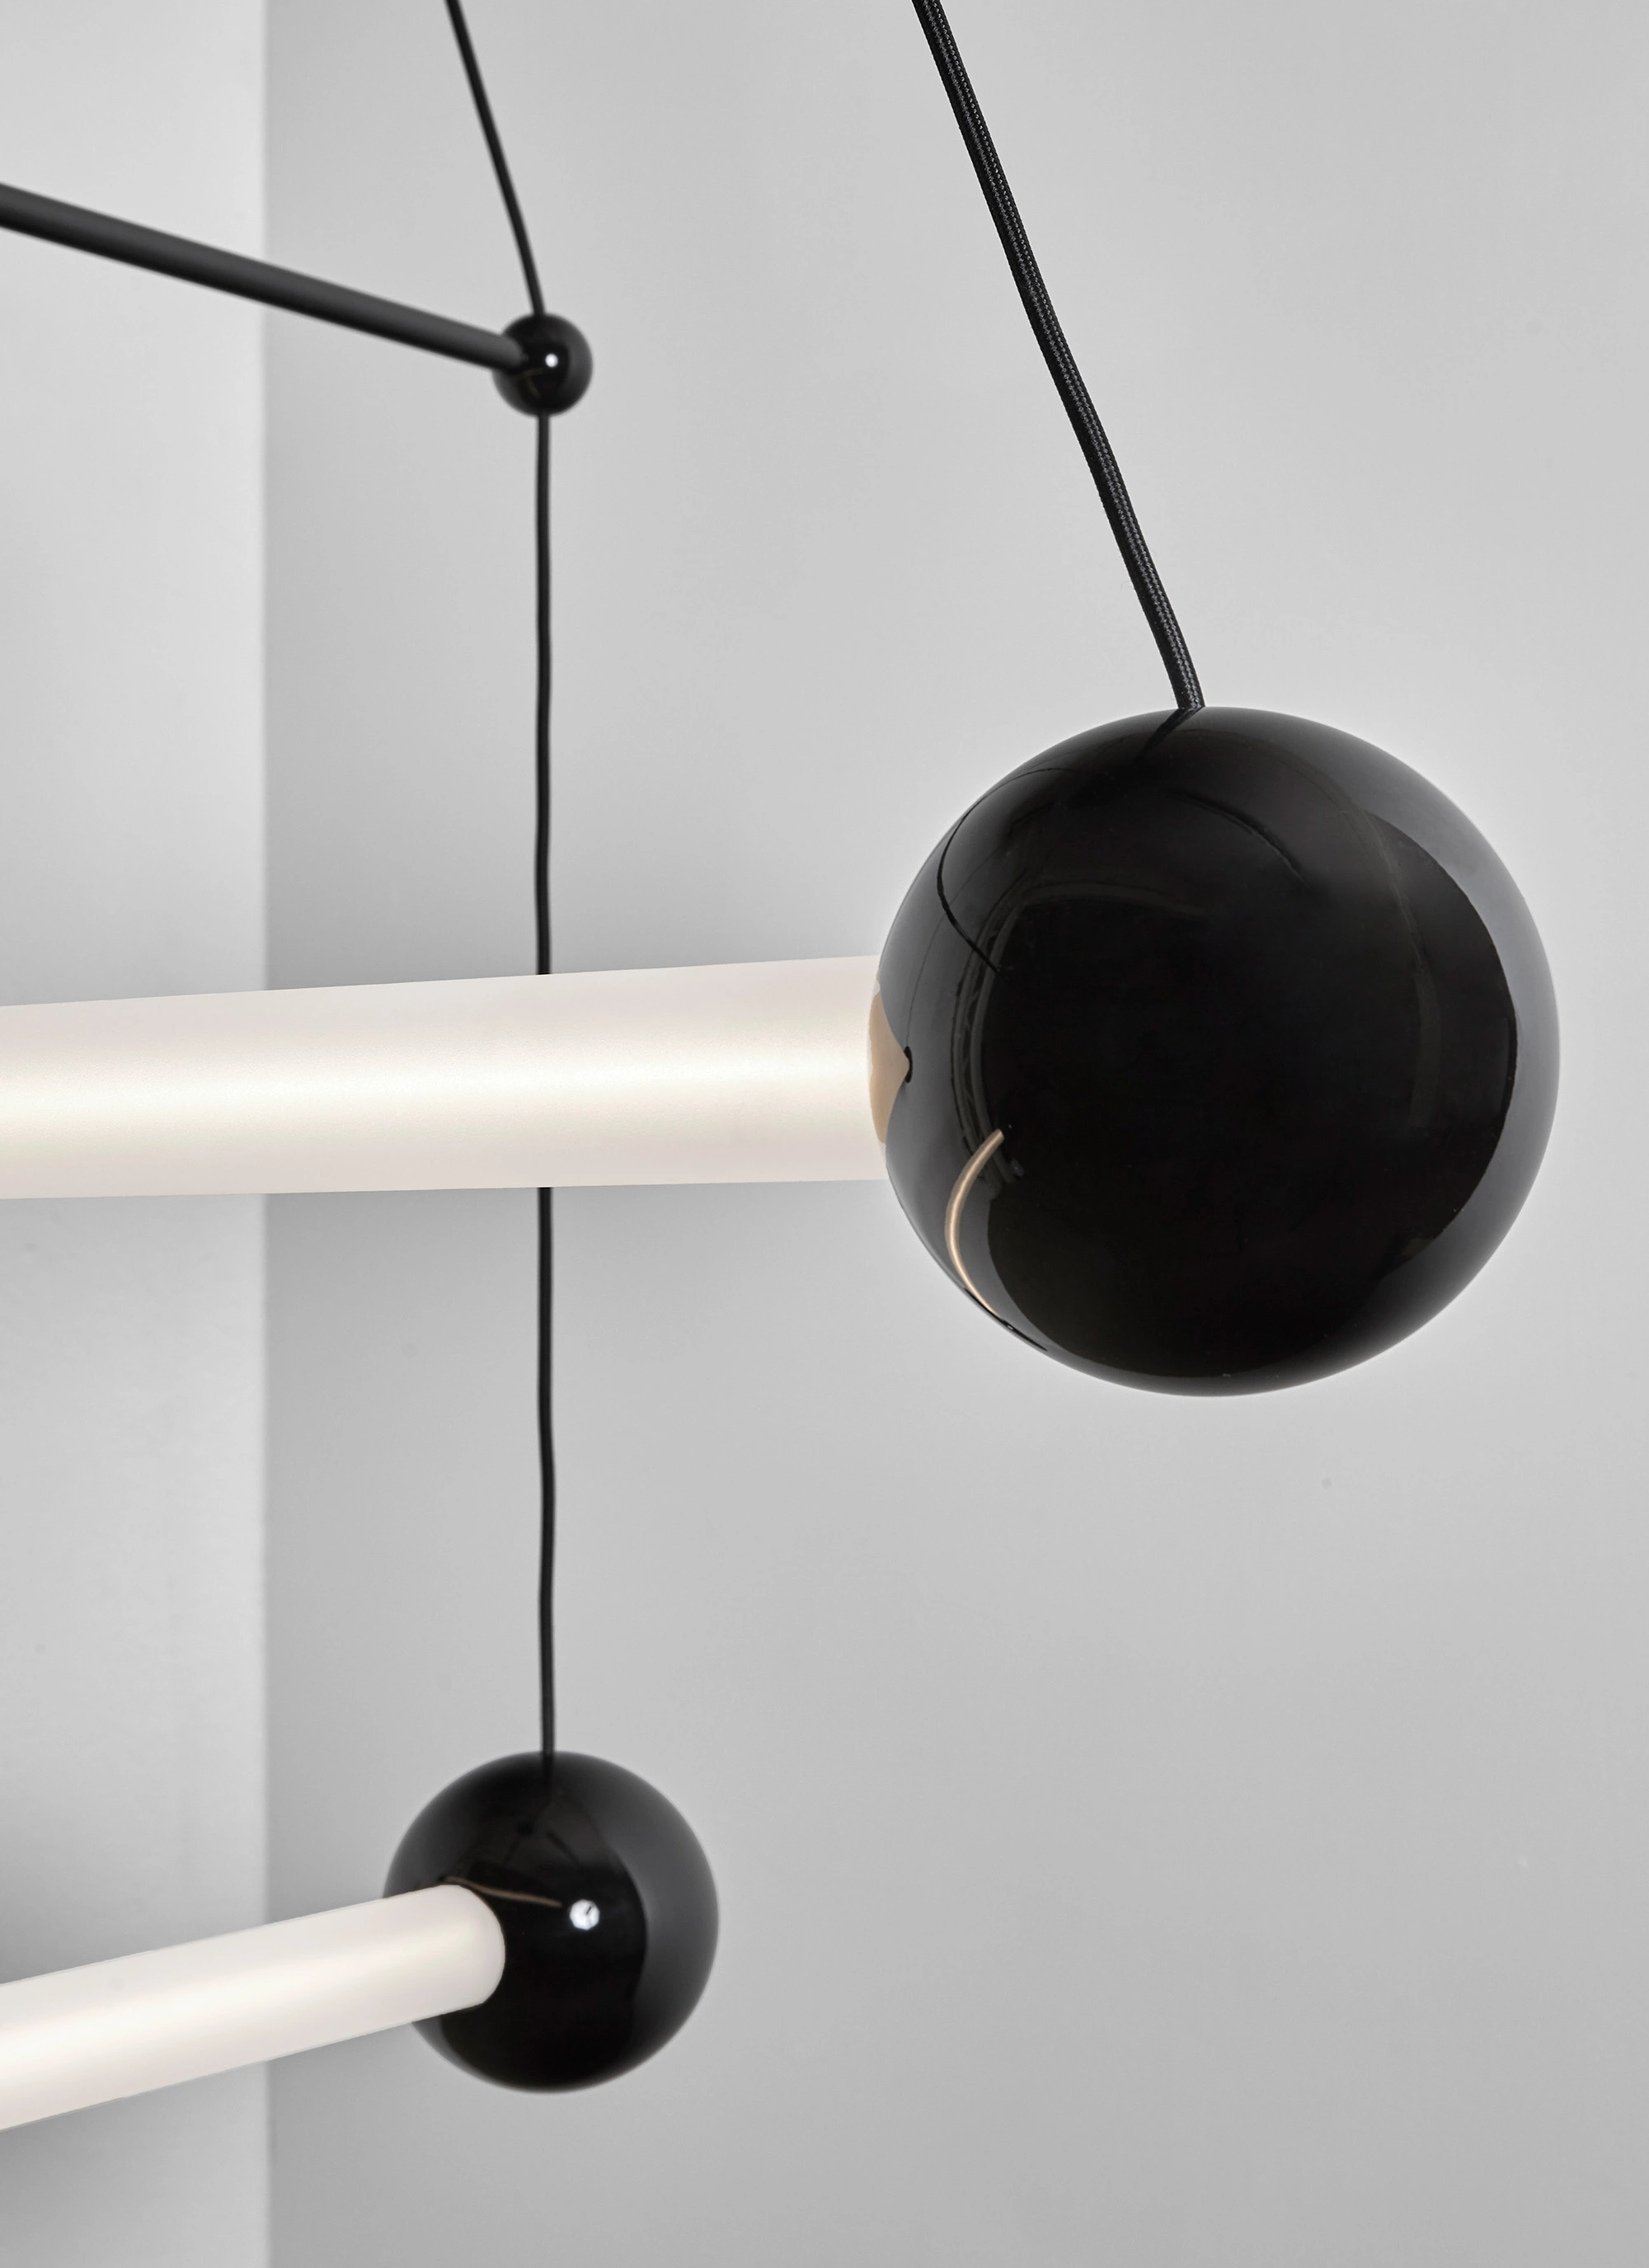 Trapeze 2 Ceiling light - Pierre Charpin - Pendant light - Galerie kreo